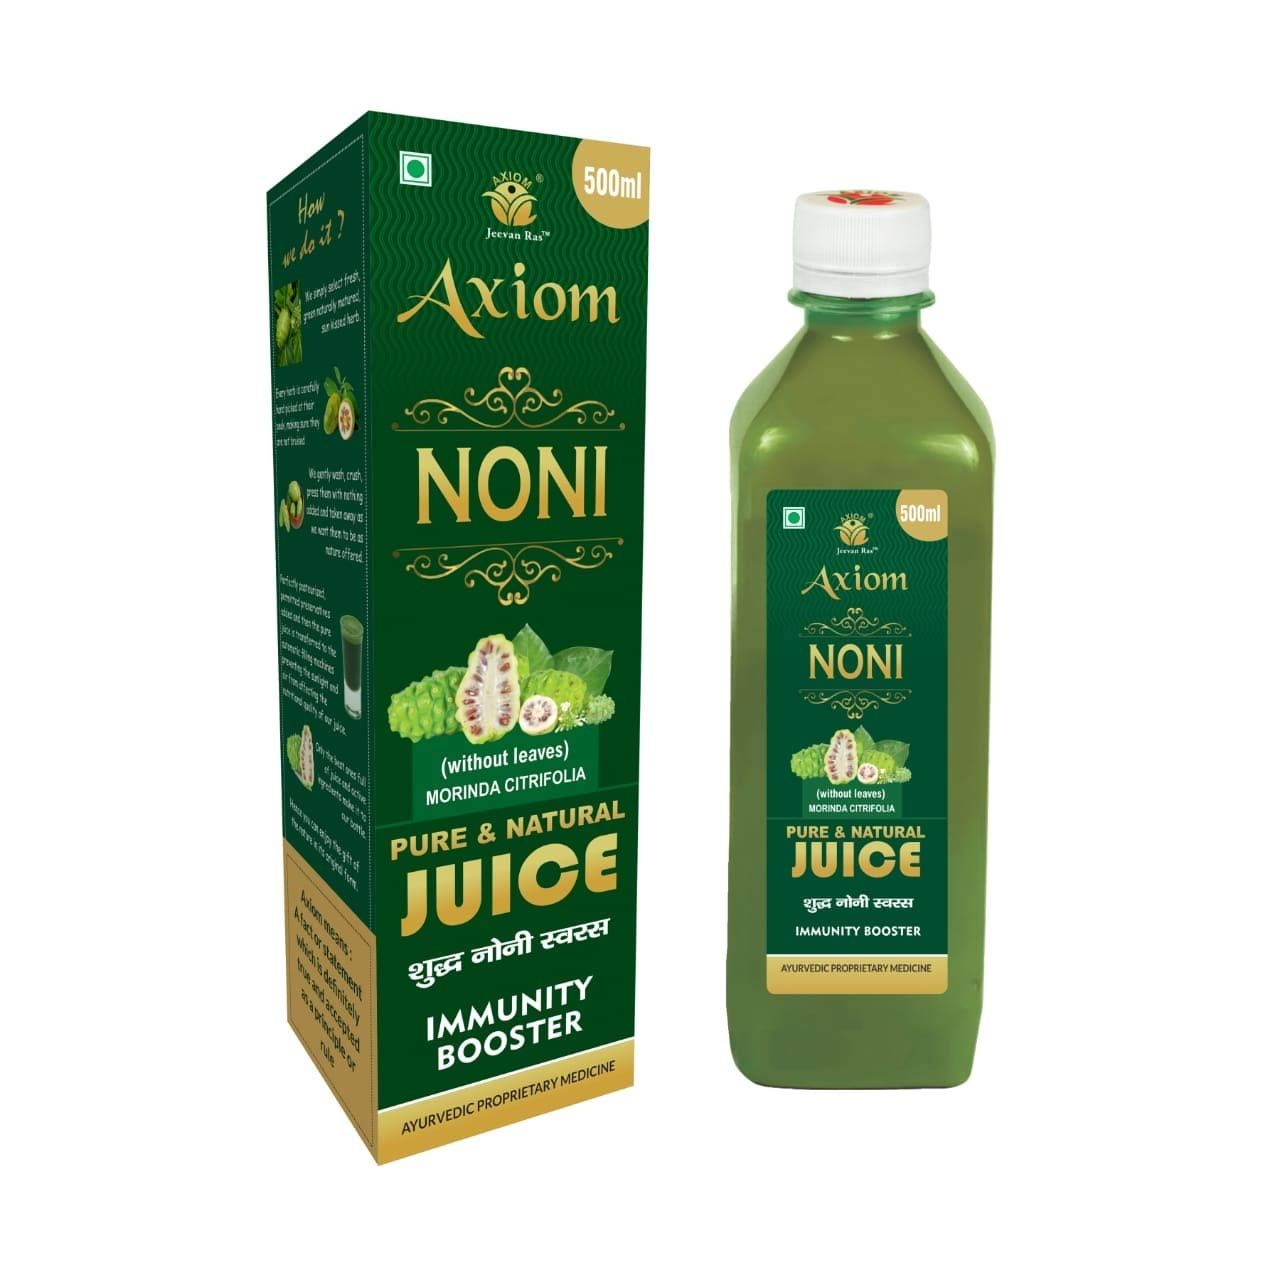 Axiom Noni Juice Image